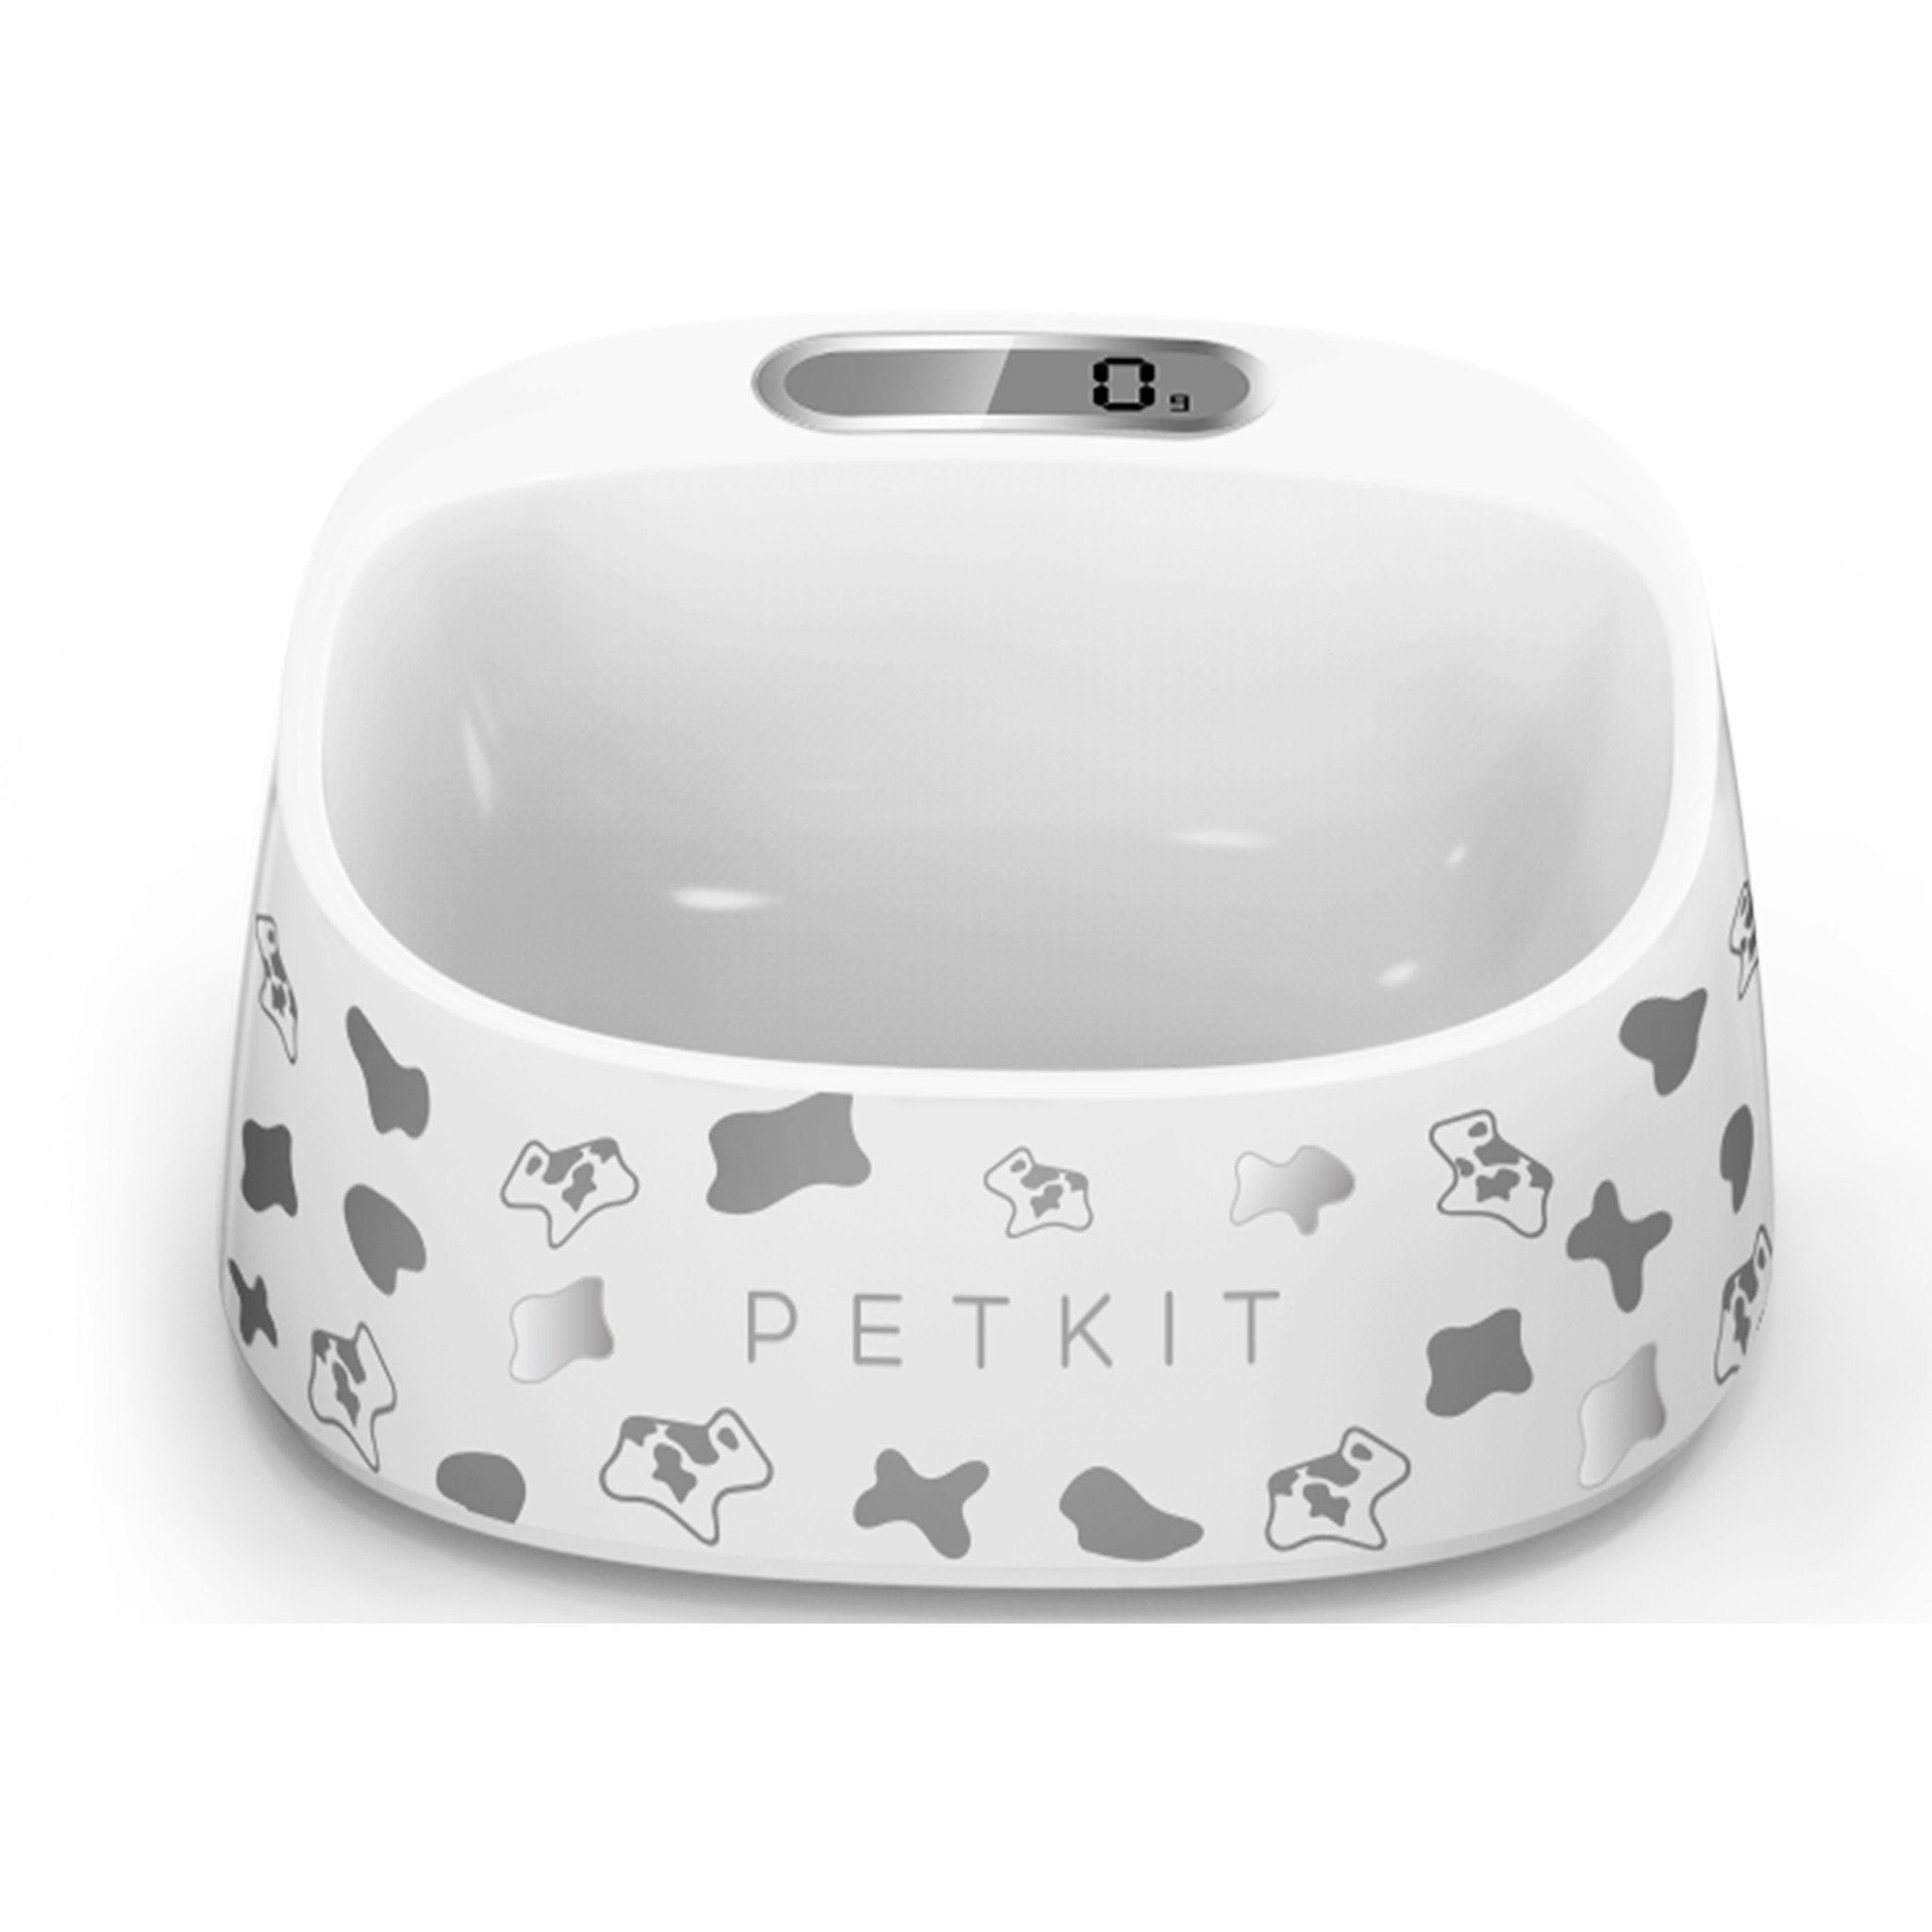 PETKIT ® 'FRESH' Anti-Bacterial Waterproof Smart Food Weight Calculating Digital Scale Pet Cat Dog Bowl Feeder w/ Inlcuded Batteries Black / White Pattern 